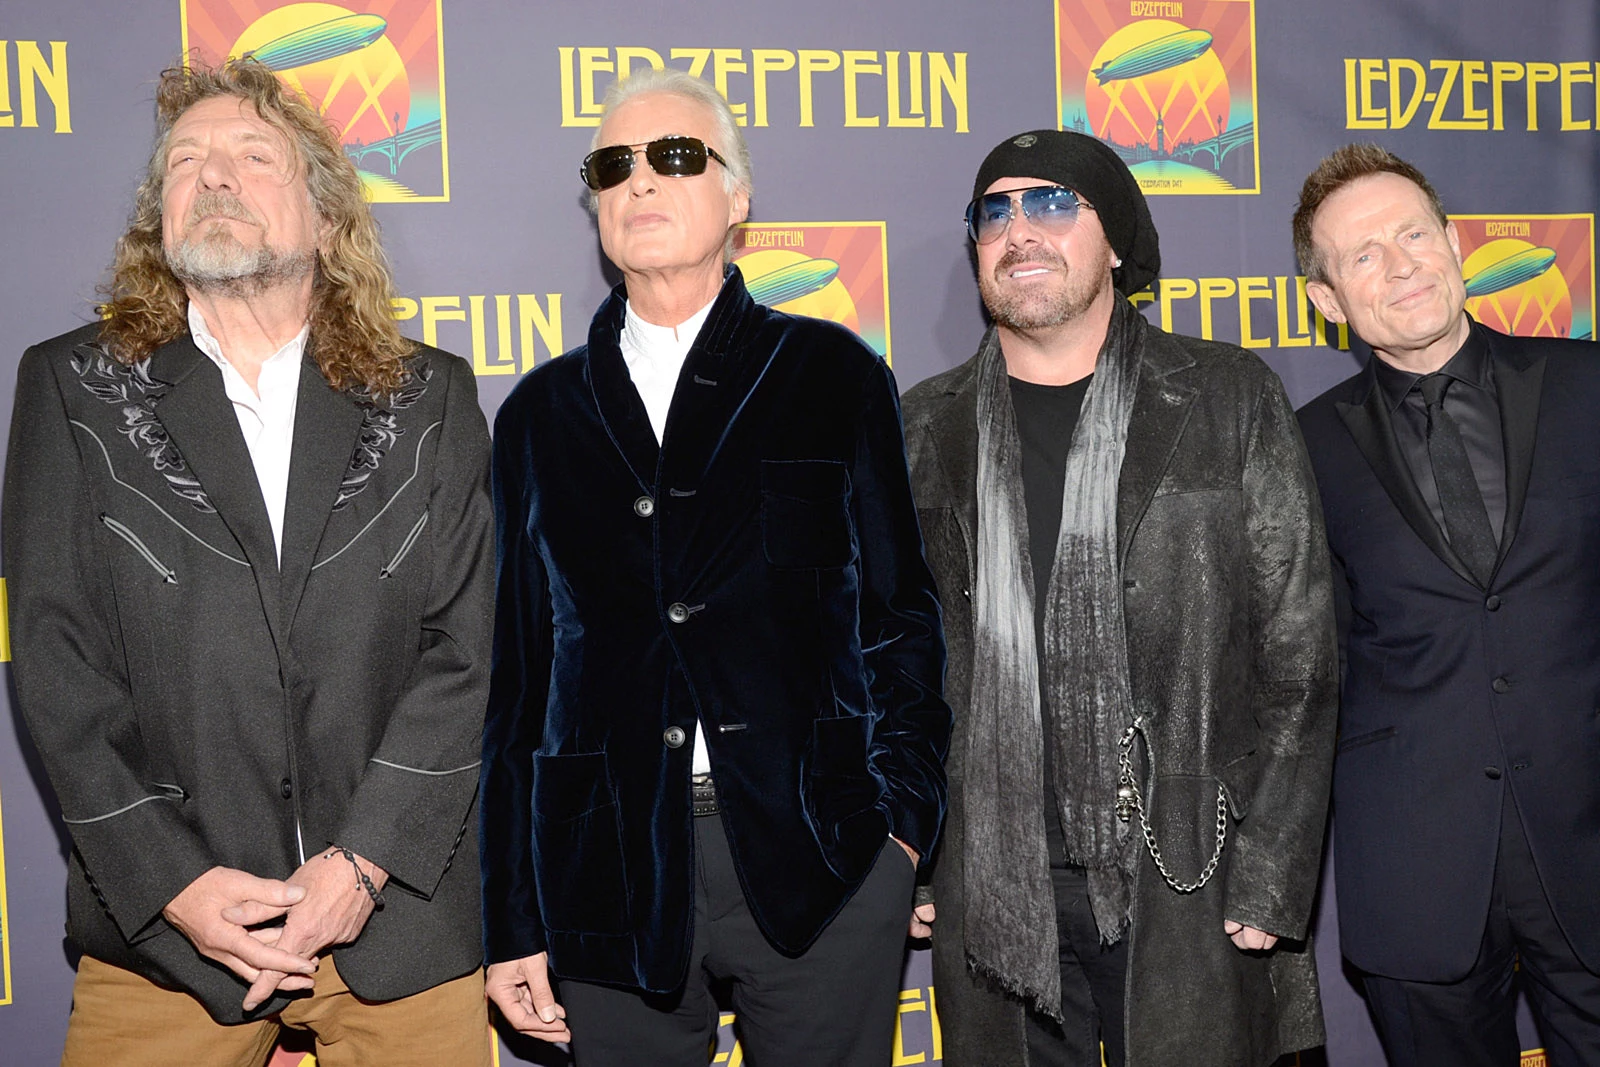 Zeppelin Force Jason Bonham to Change Band Name